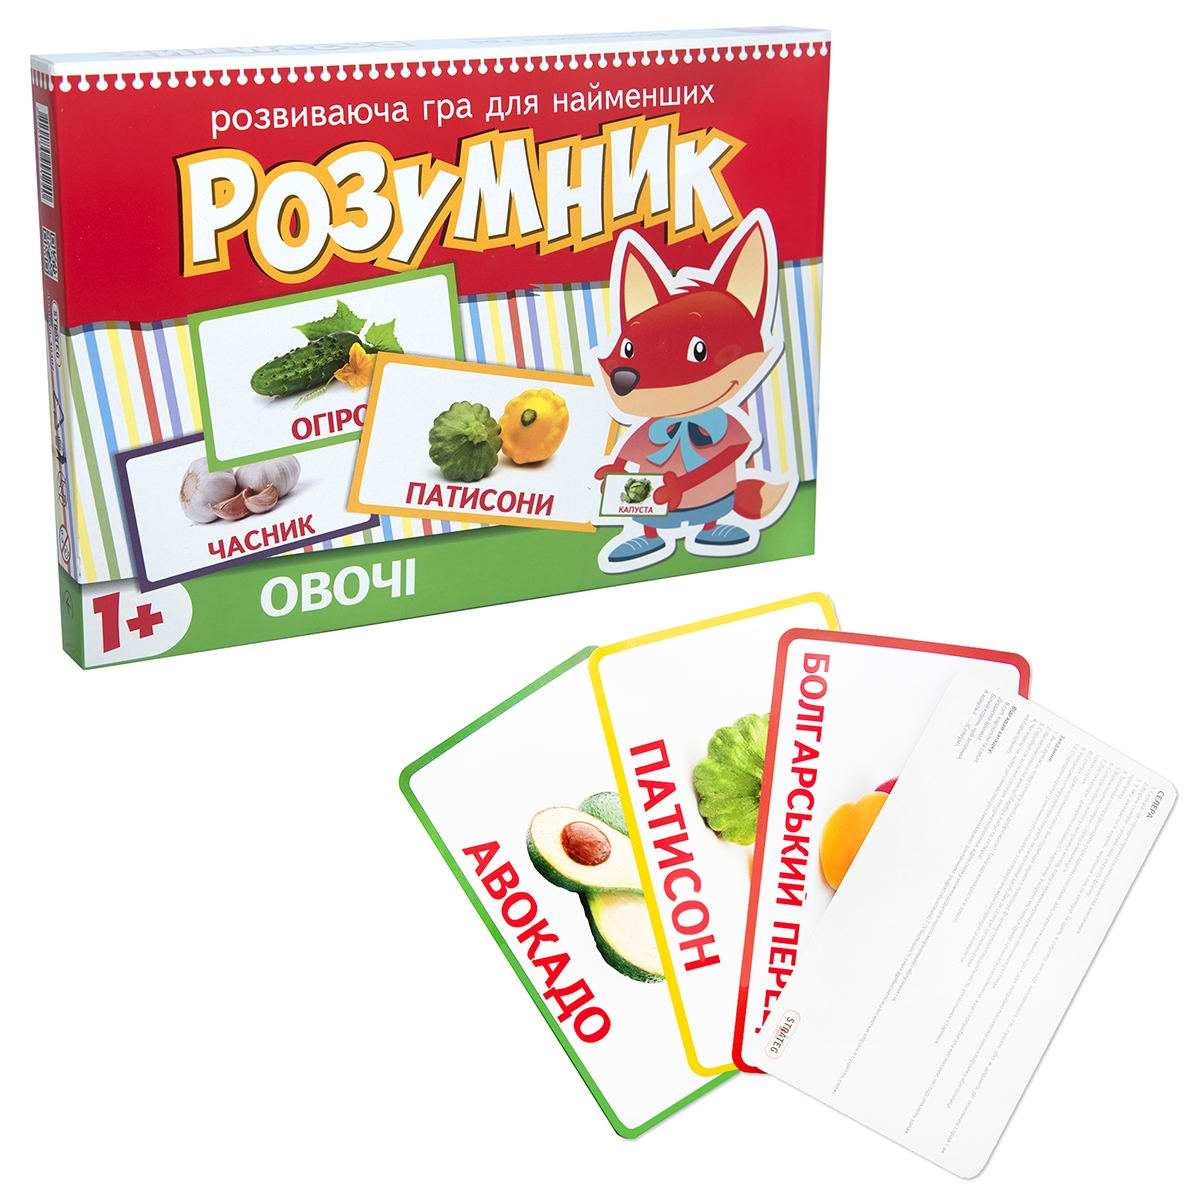 Game Strateg Little Genius Series Vegetables in Ukrainian (30302)